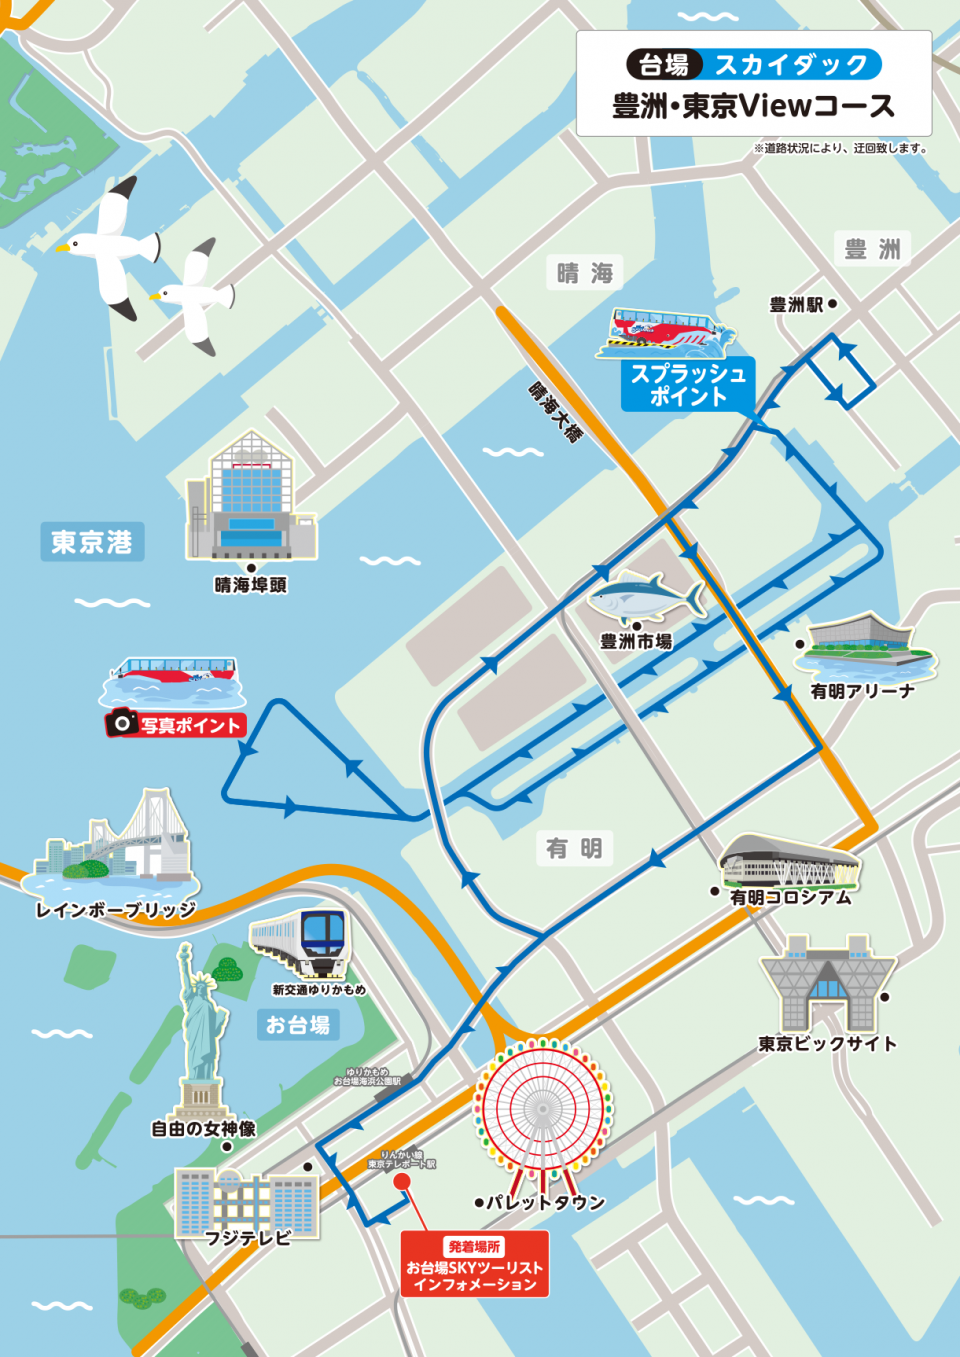 【D501】水陸両用バス スカイダック台場 豊洲・東京Viewコース